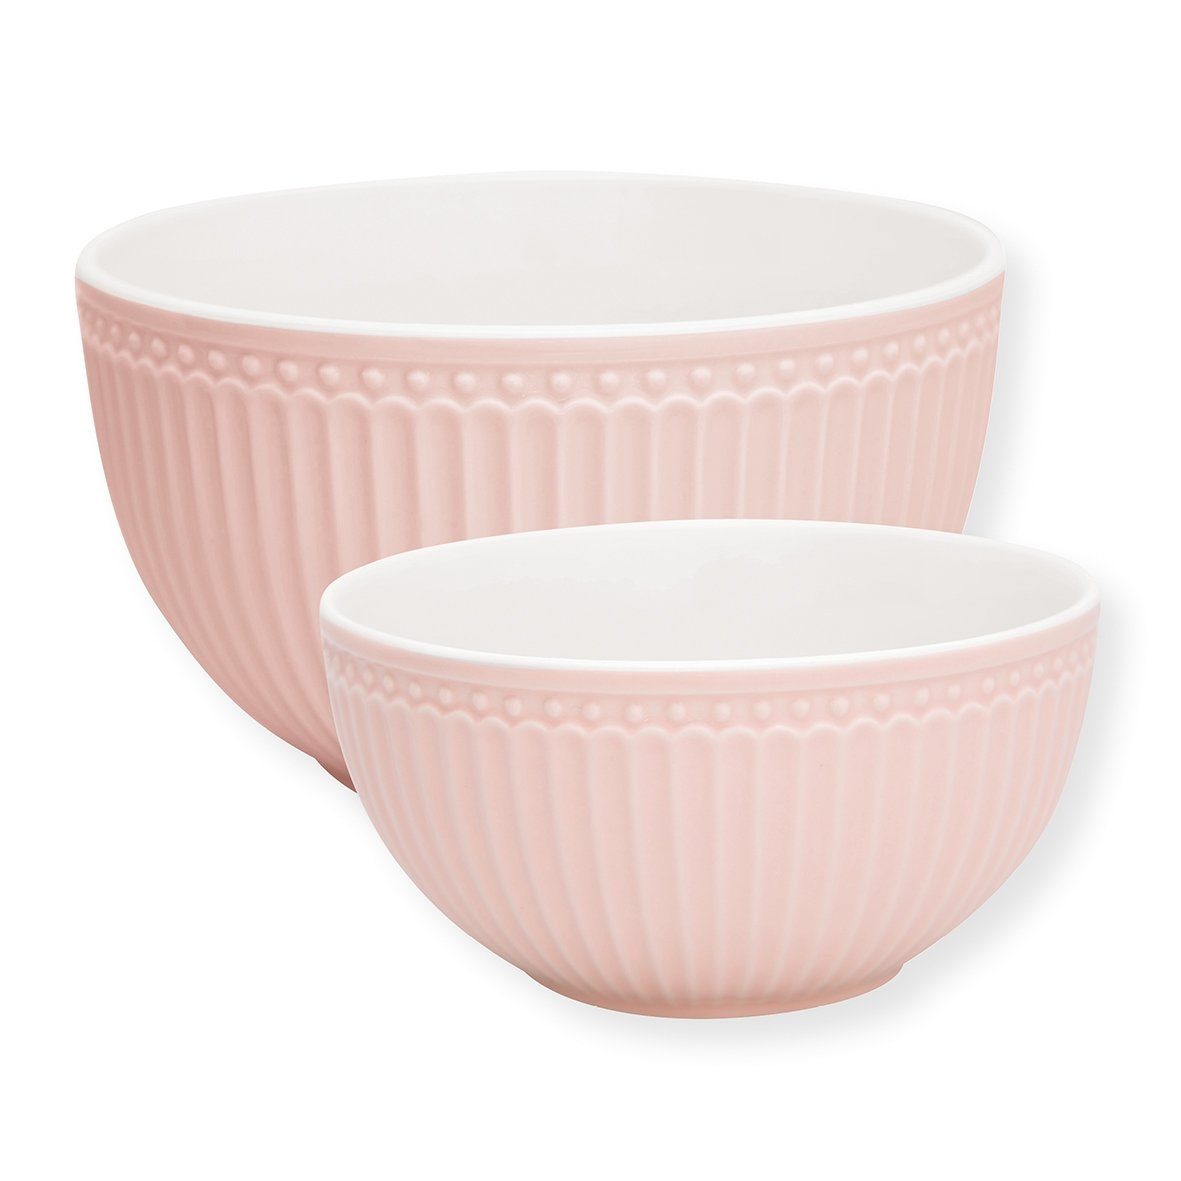 Greengate Schale Alice Servierschüssel pale pink Set2, Keramik, (Schüsseln & Schalen)